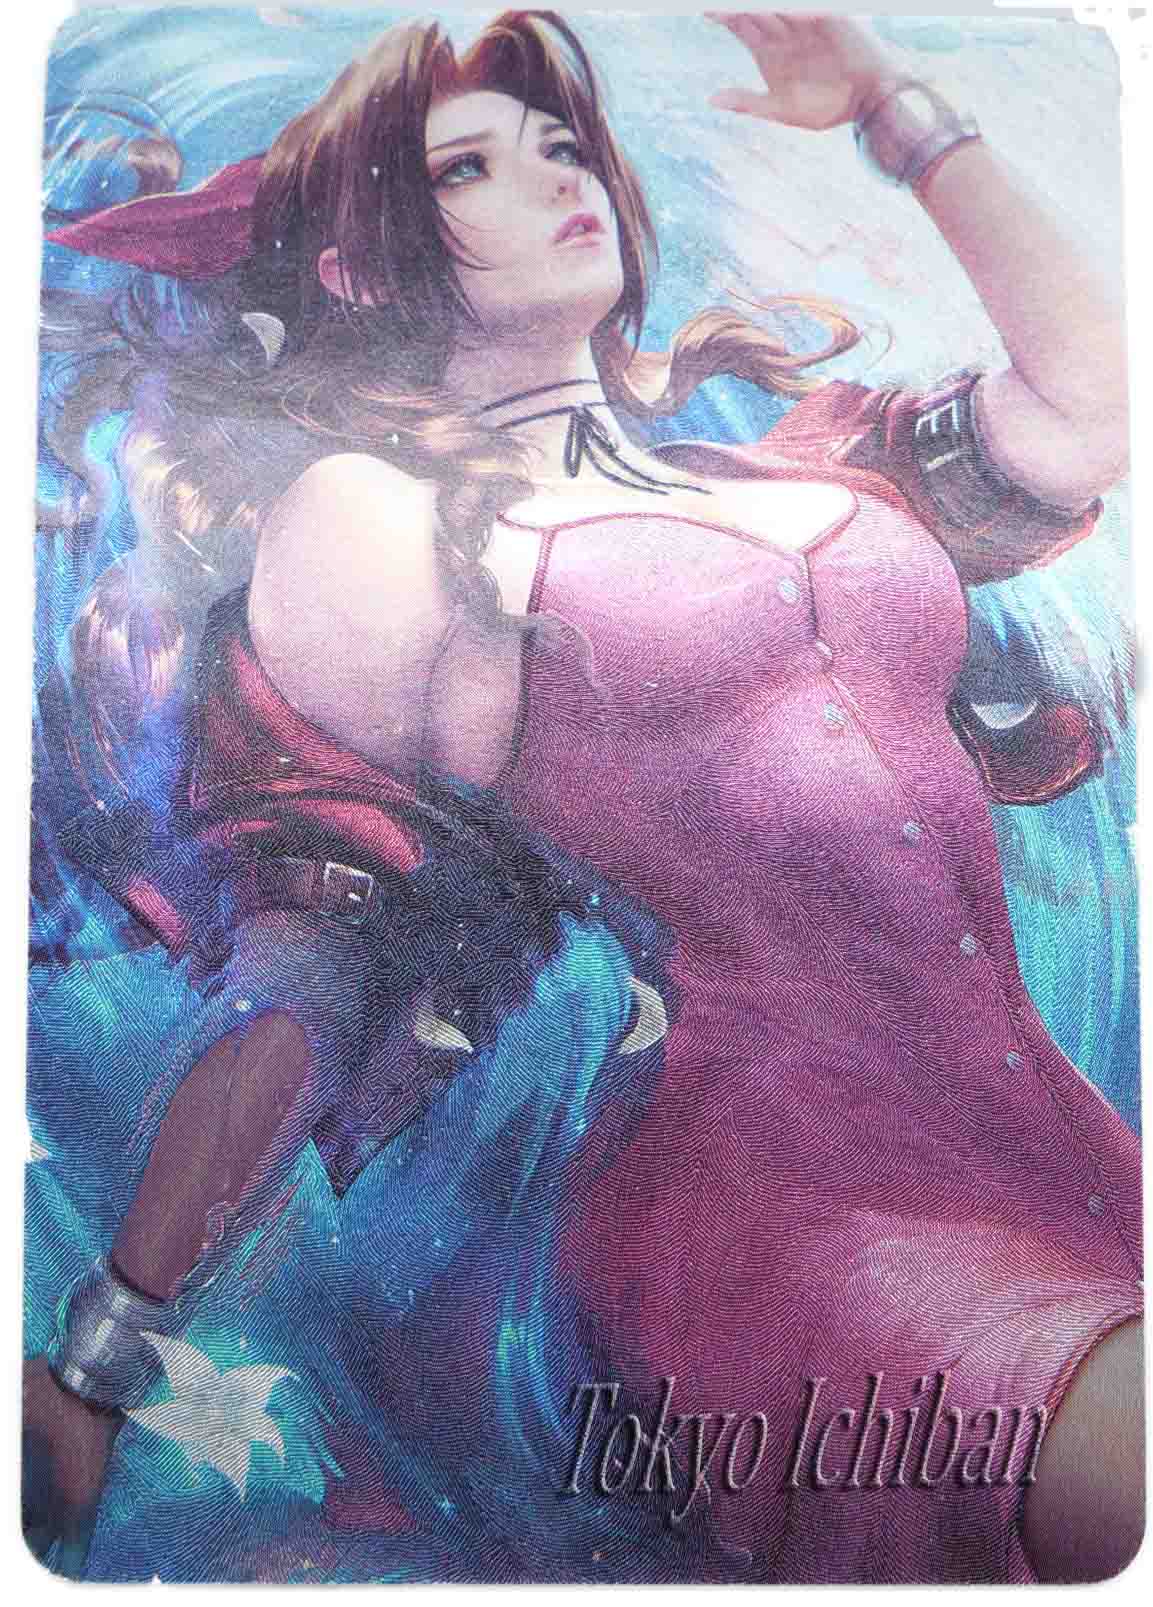 Final Fantasy 7 Sexy Trading Card Aerith Gainsborough metallic effects #1